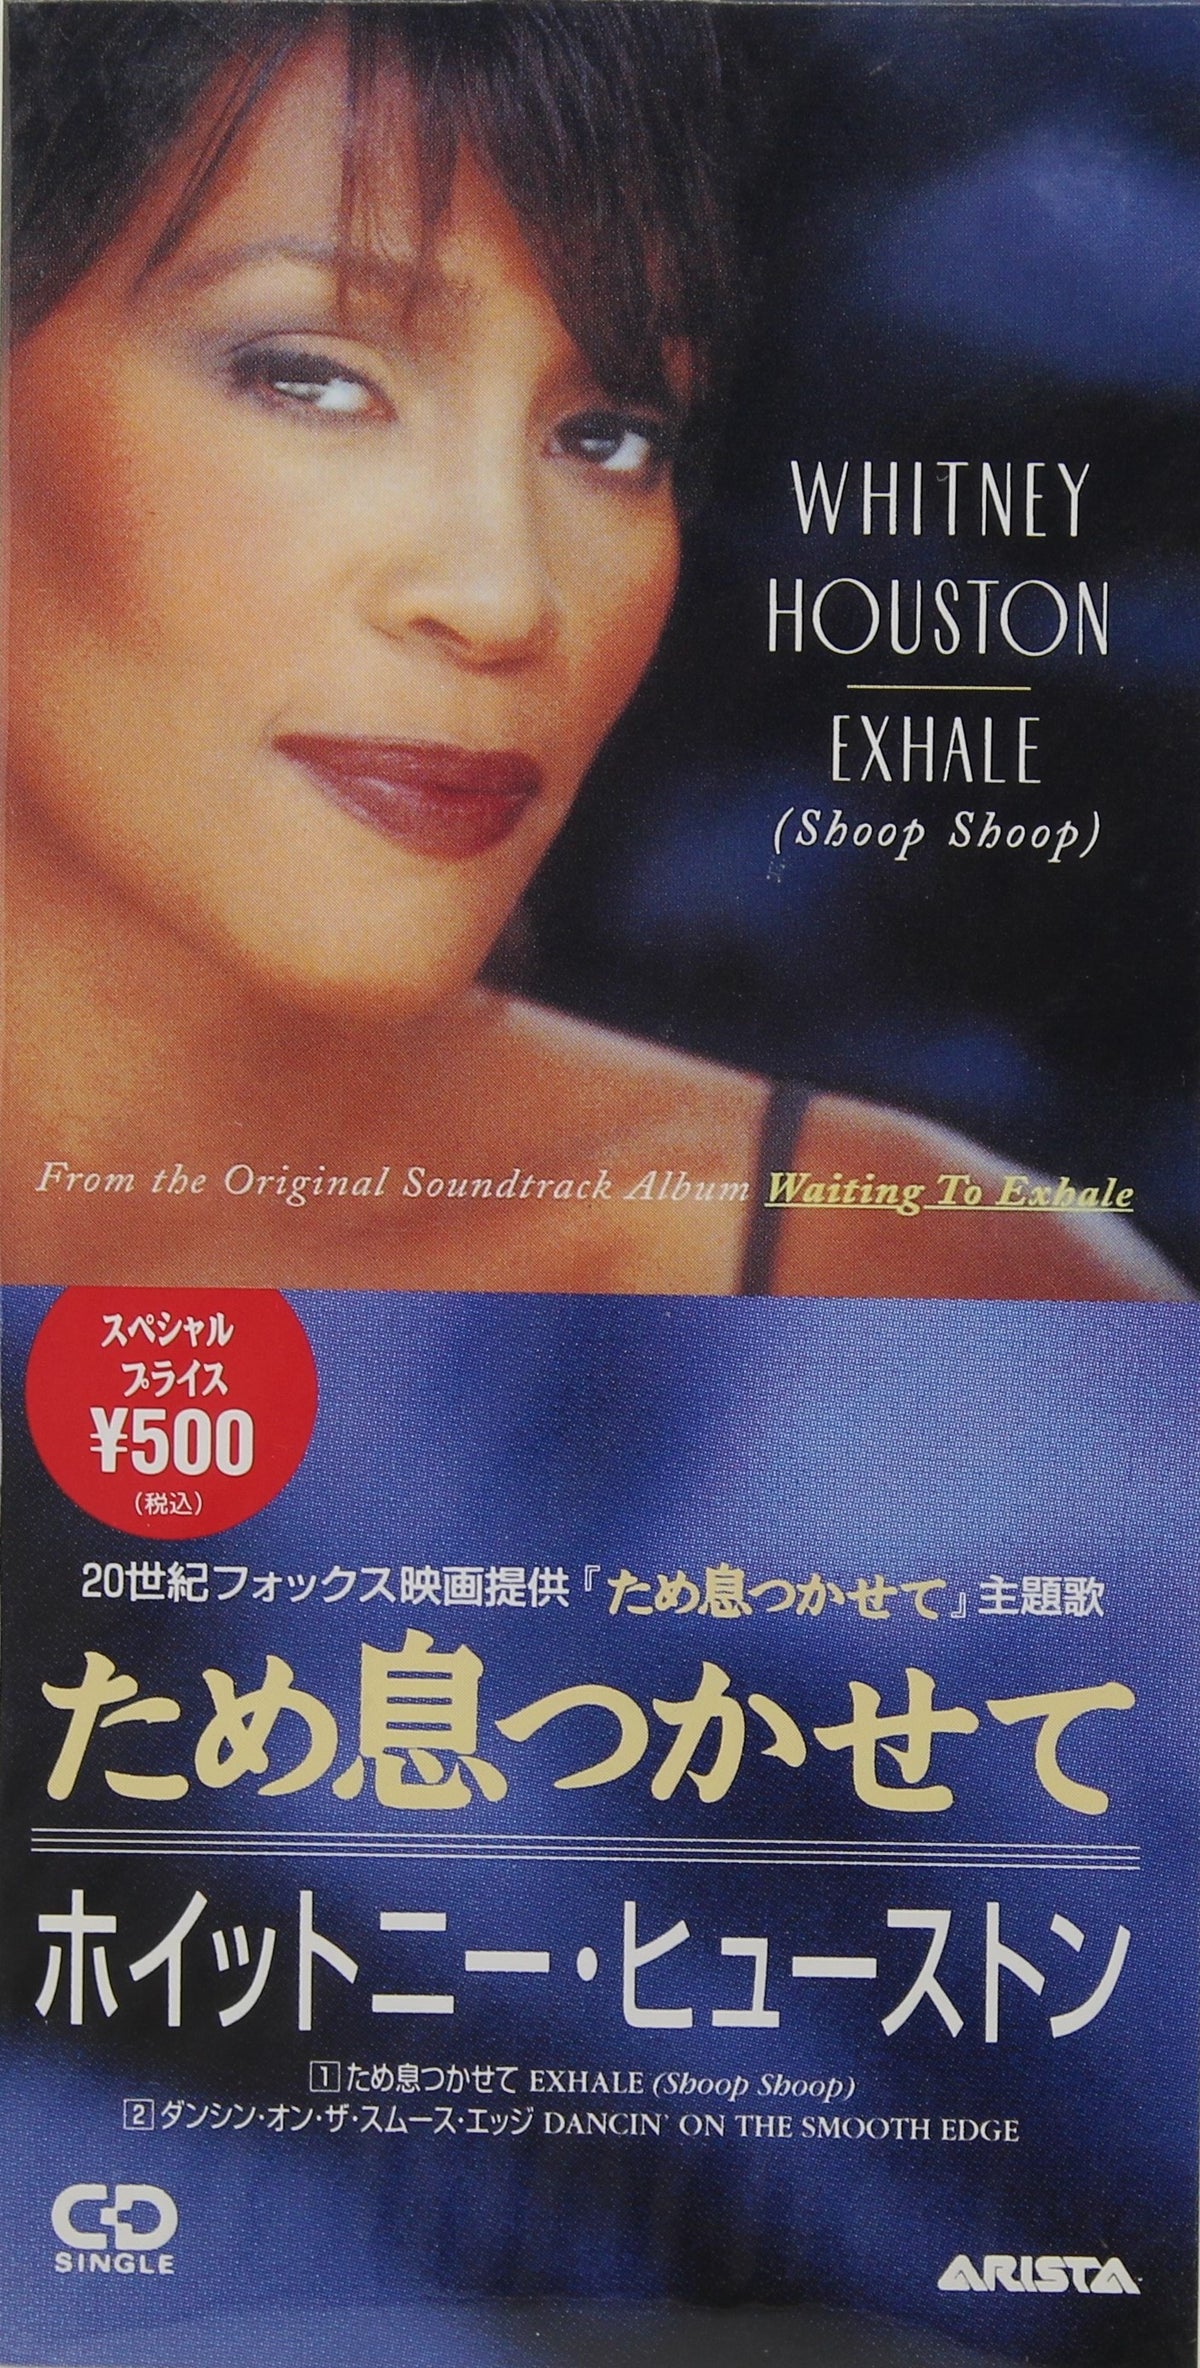 Whitney Houston – Exhale (Shoop Shoop), CD, Mini, Single, Japan 1995